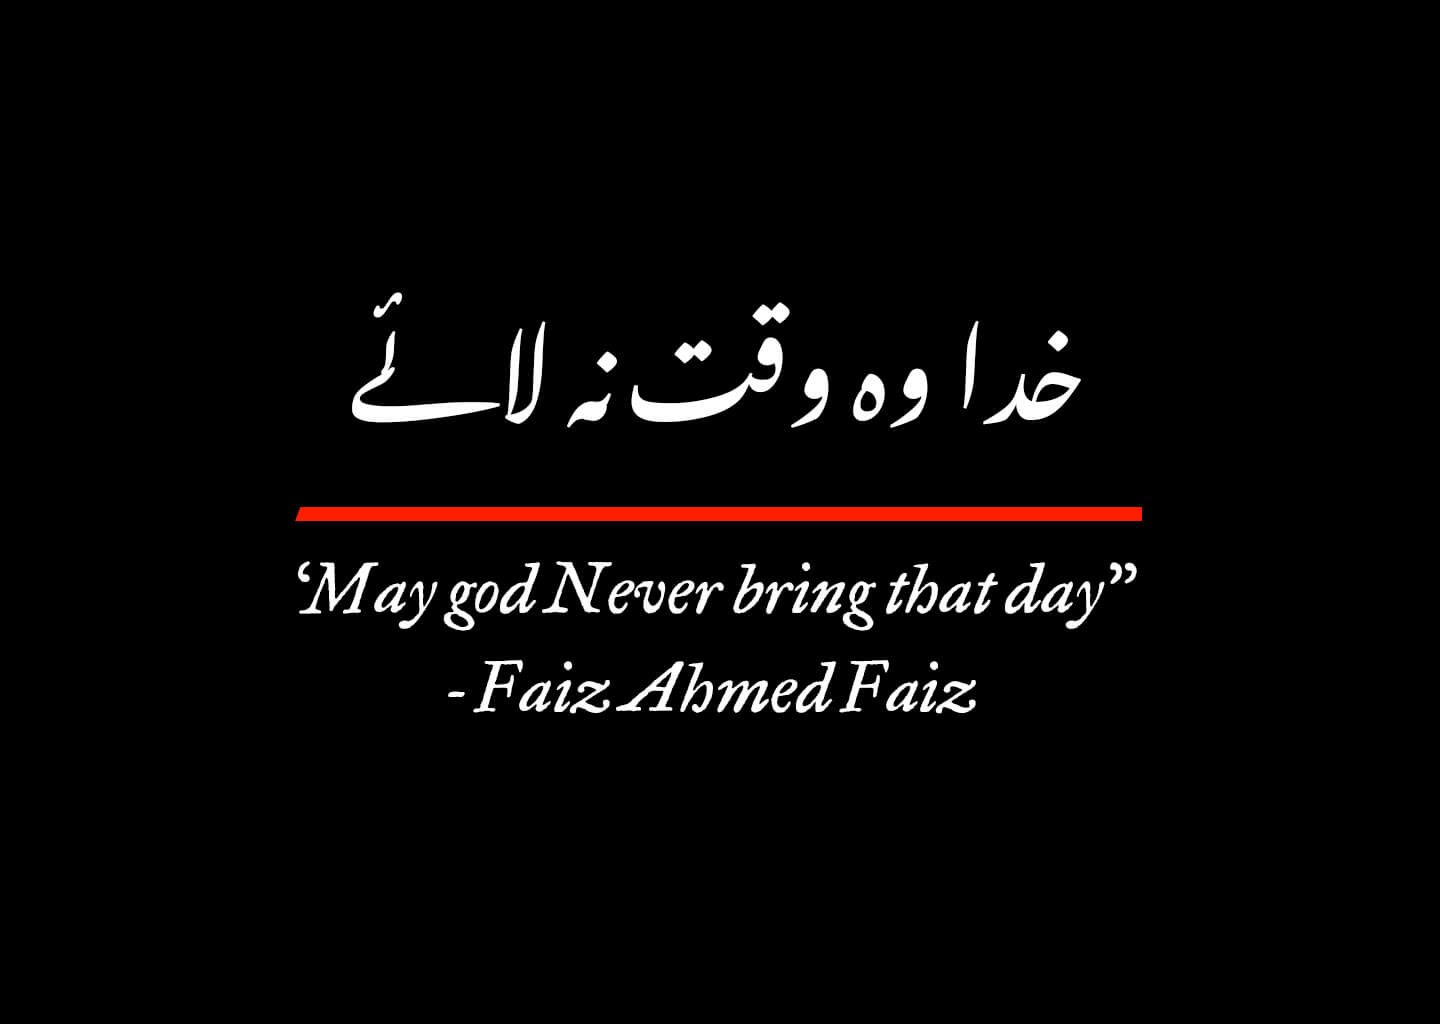 May God Never Bring That Day, by Faiz Ahmed Faiz